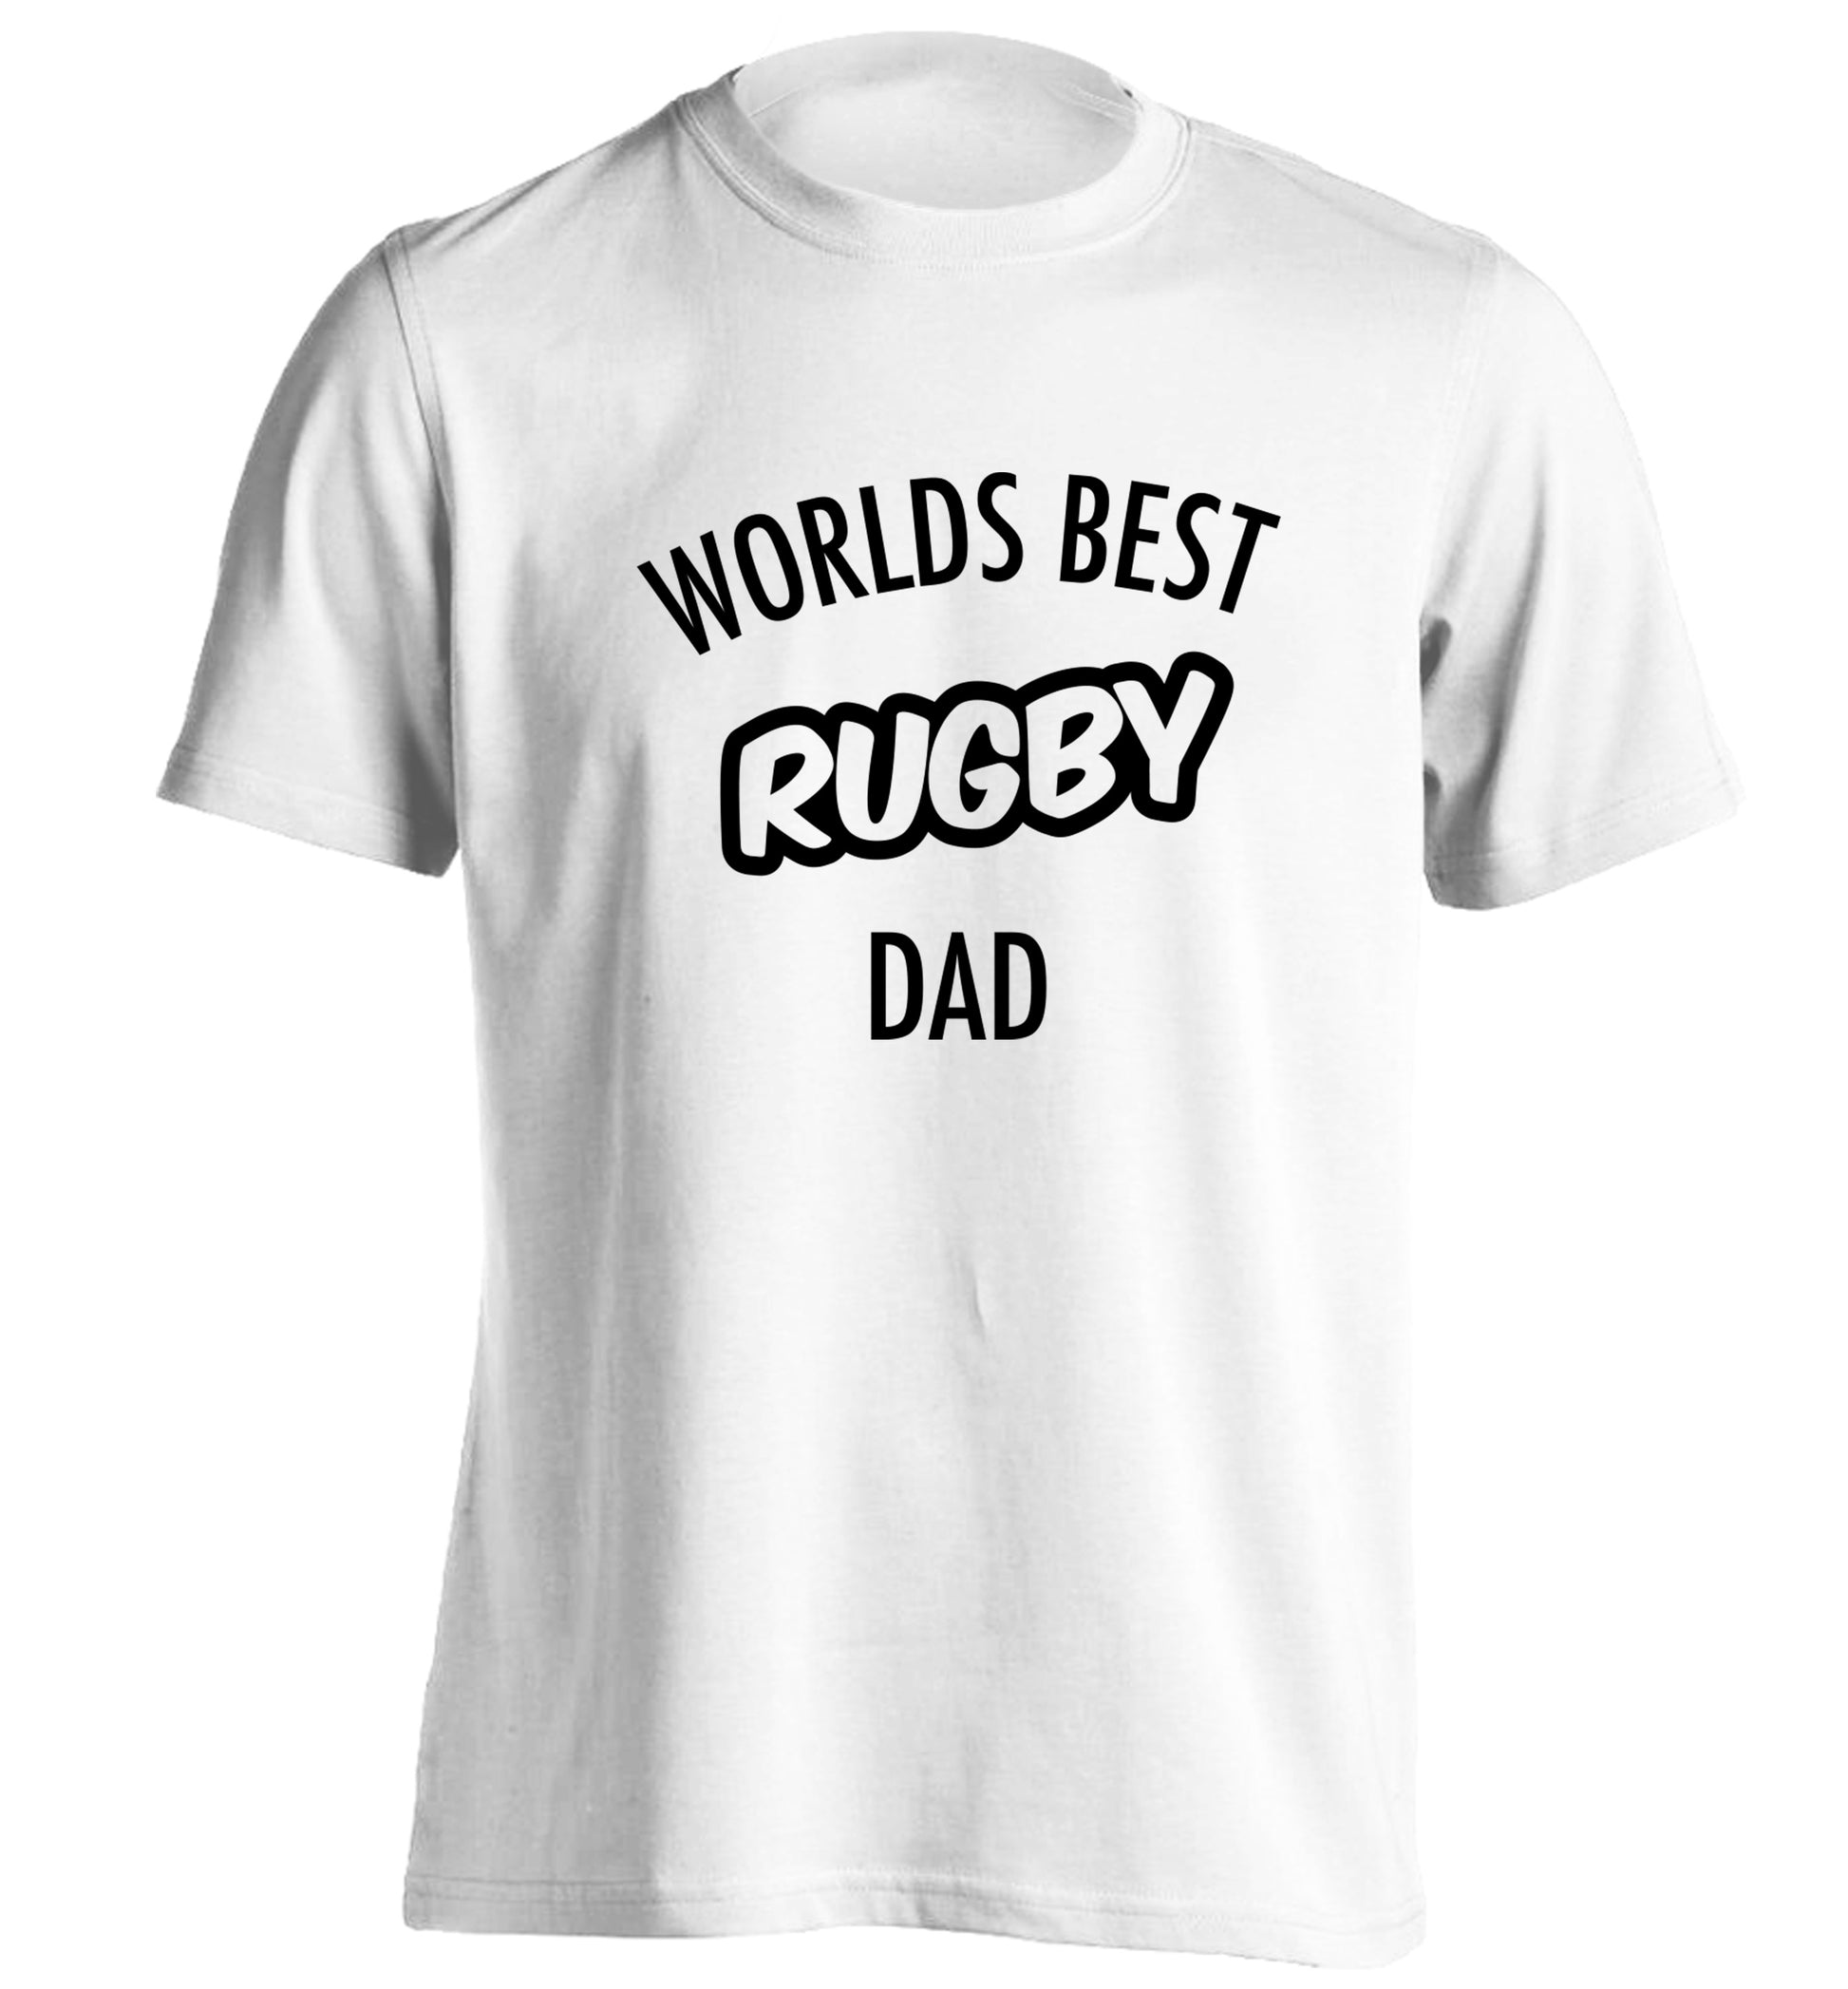 Worlds best rugby dad adults unisex white Tshirt 2XL